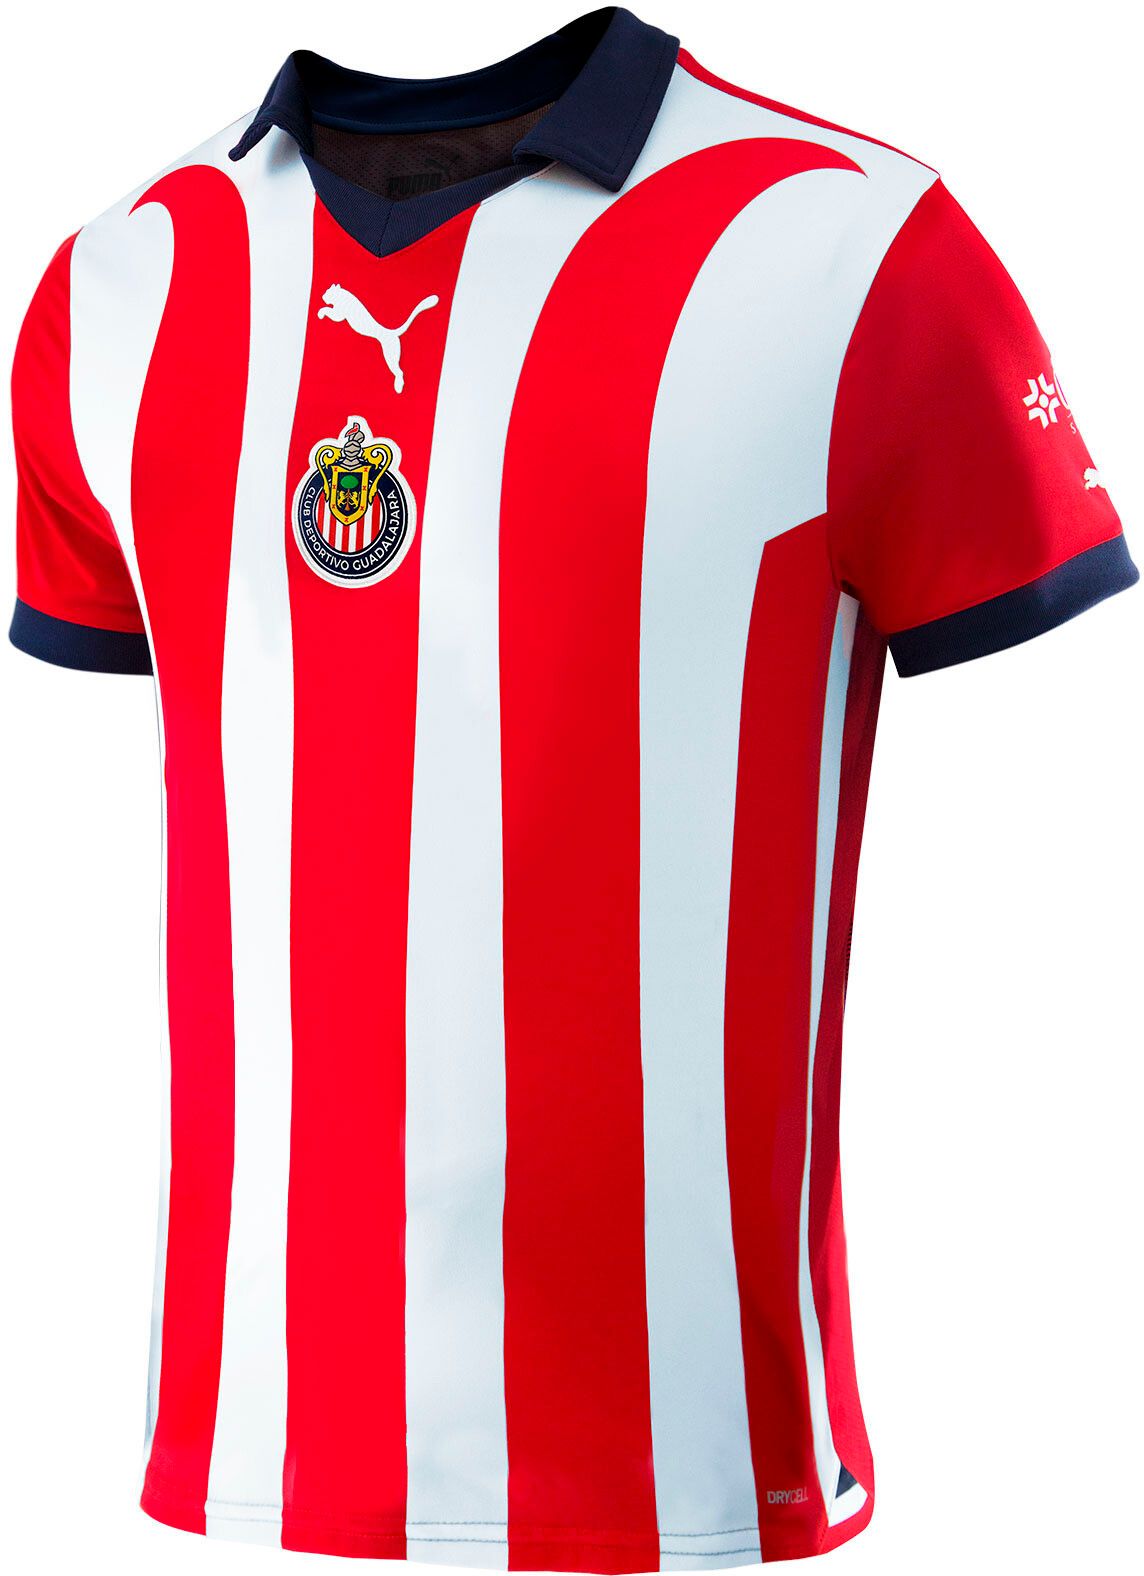  Chivas De Guadalajara Short Sleeve Away Jersey, White, Large : Soccer  Jerseys : Sports & Outdoors